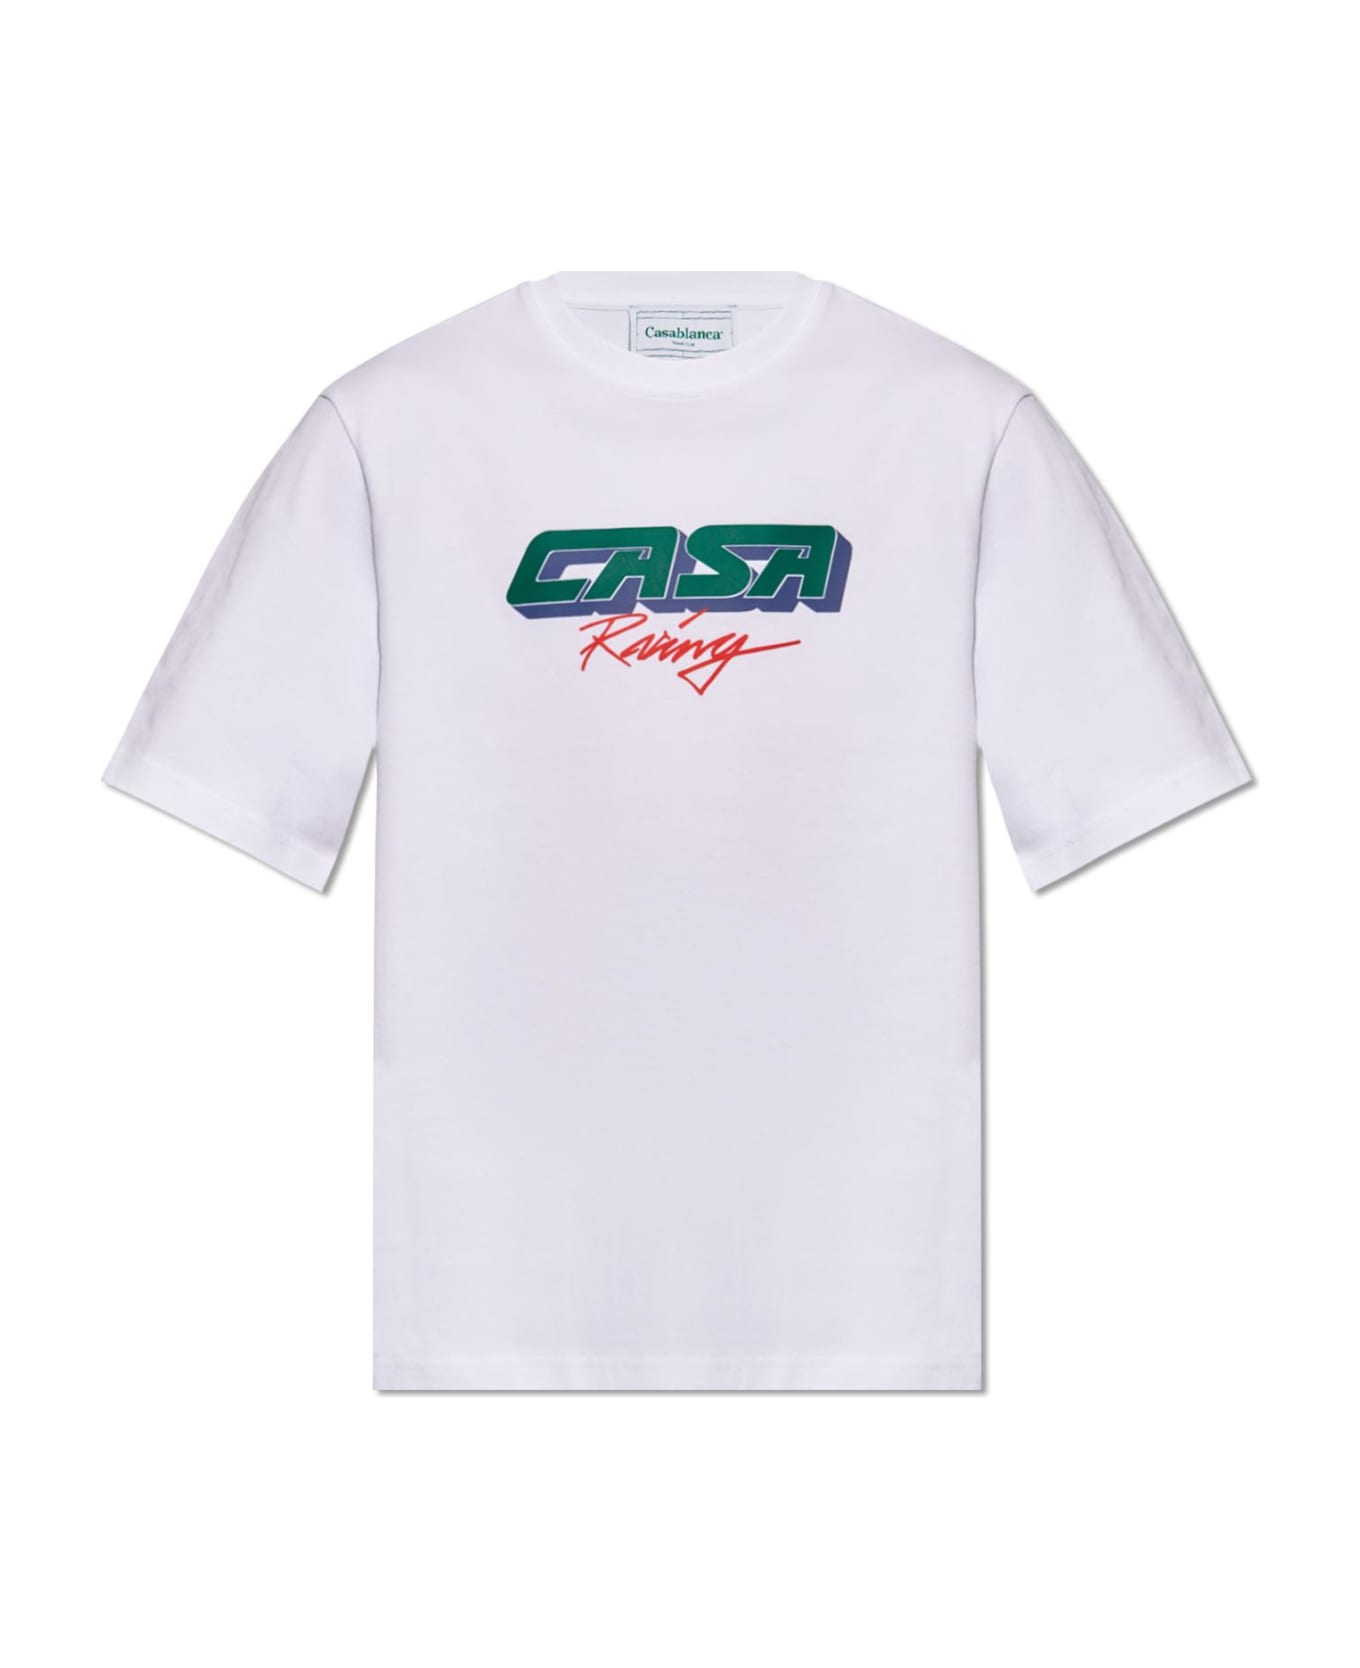 Casablanca Printed T-shirt - MULTICOLOUR